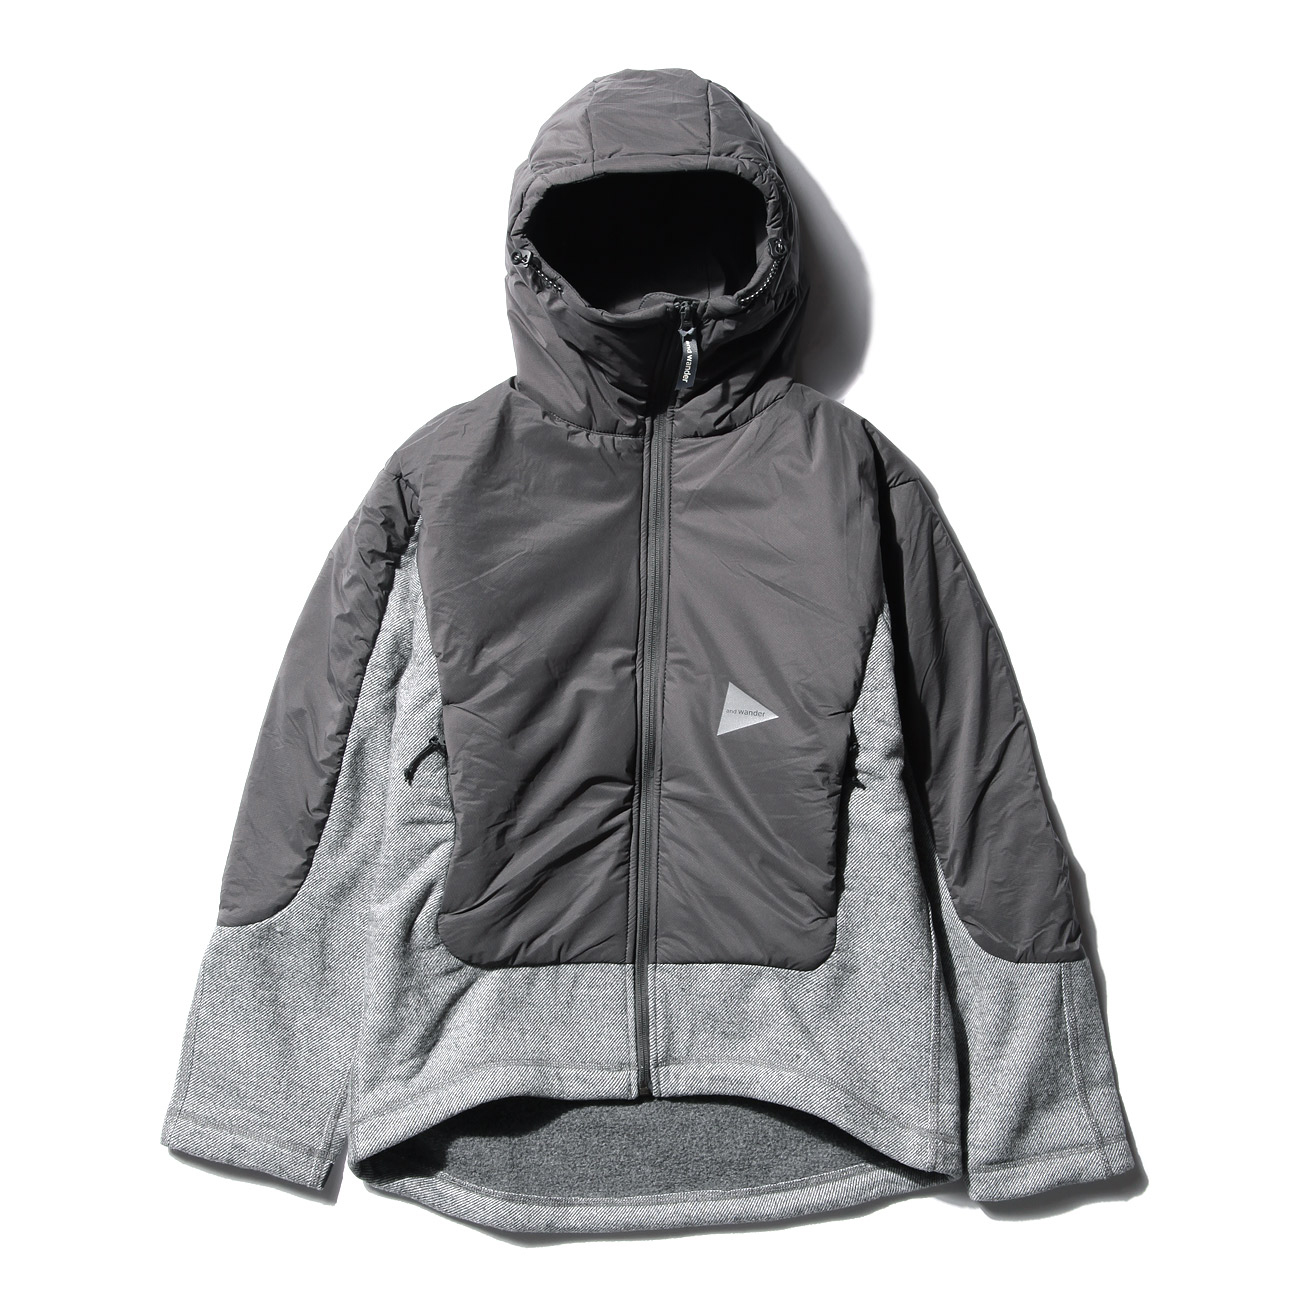 twill fleece jacket - Gray